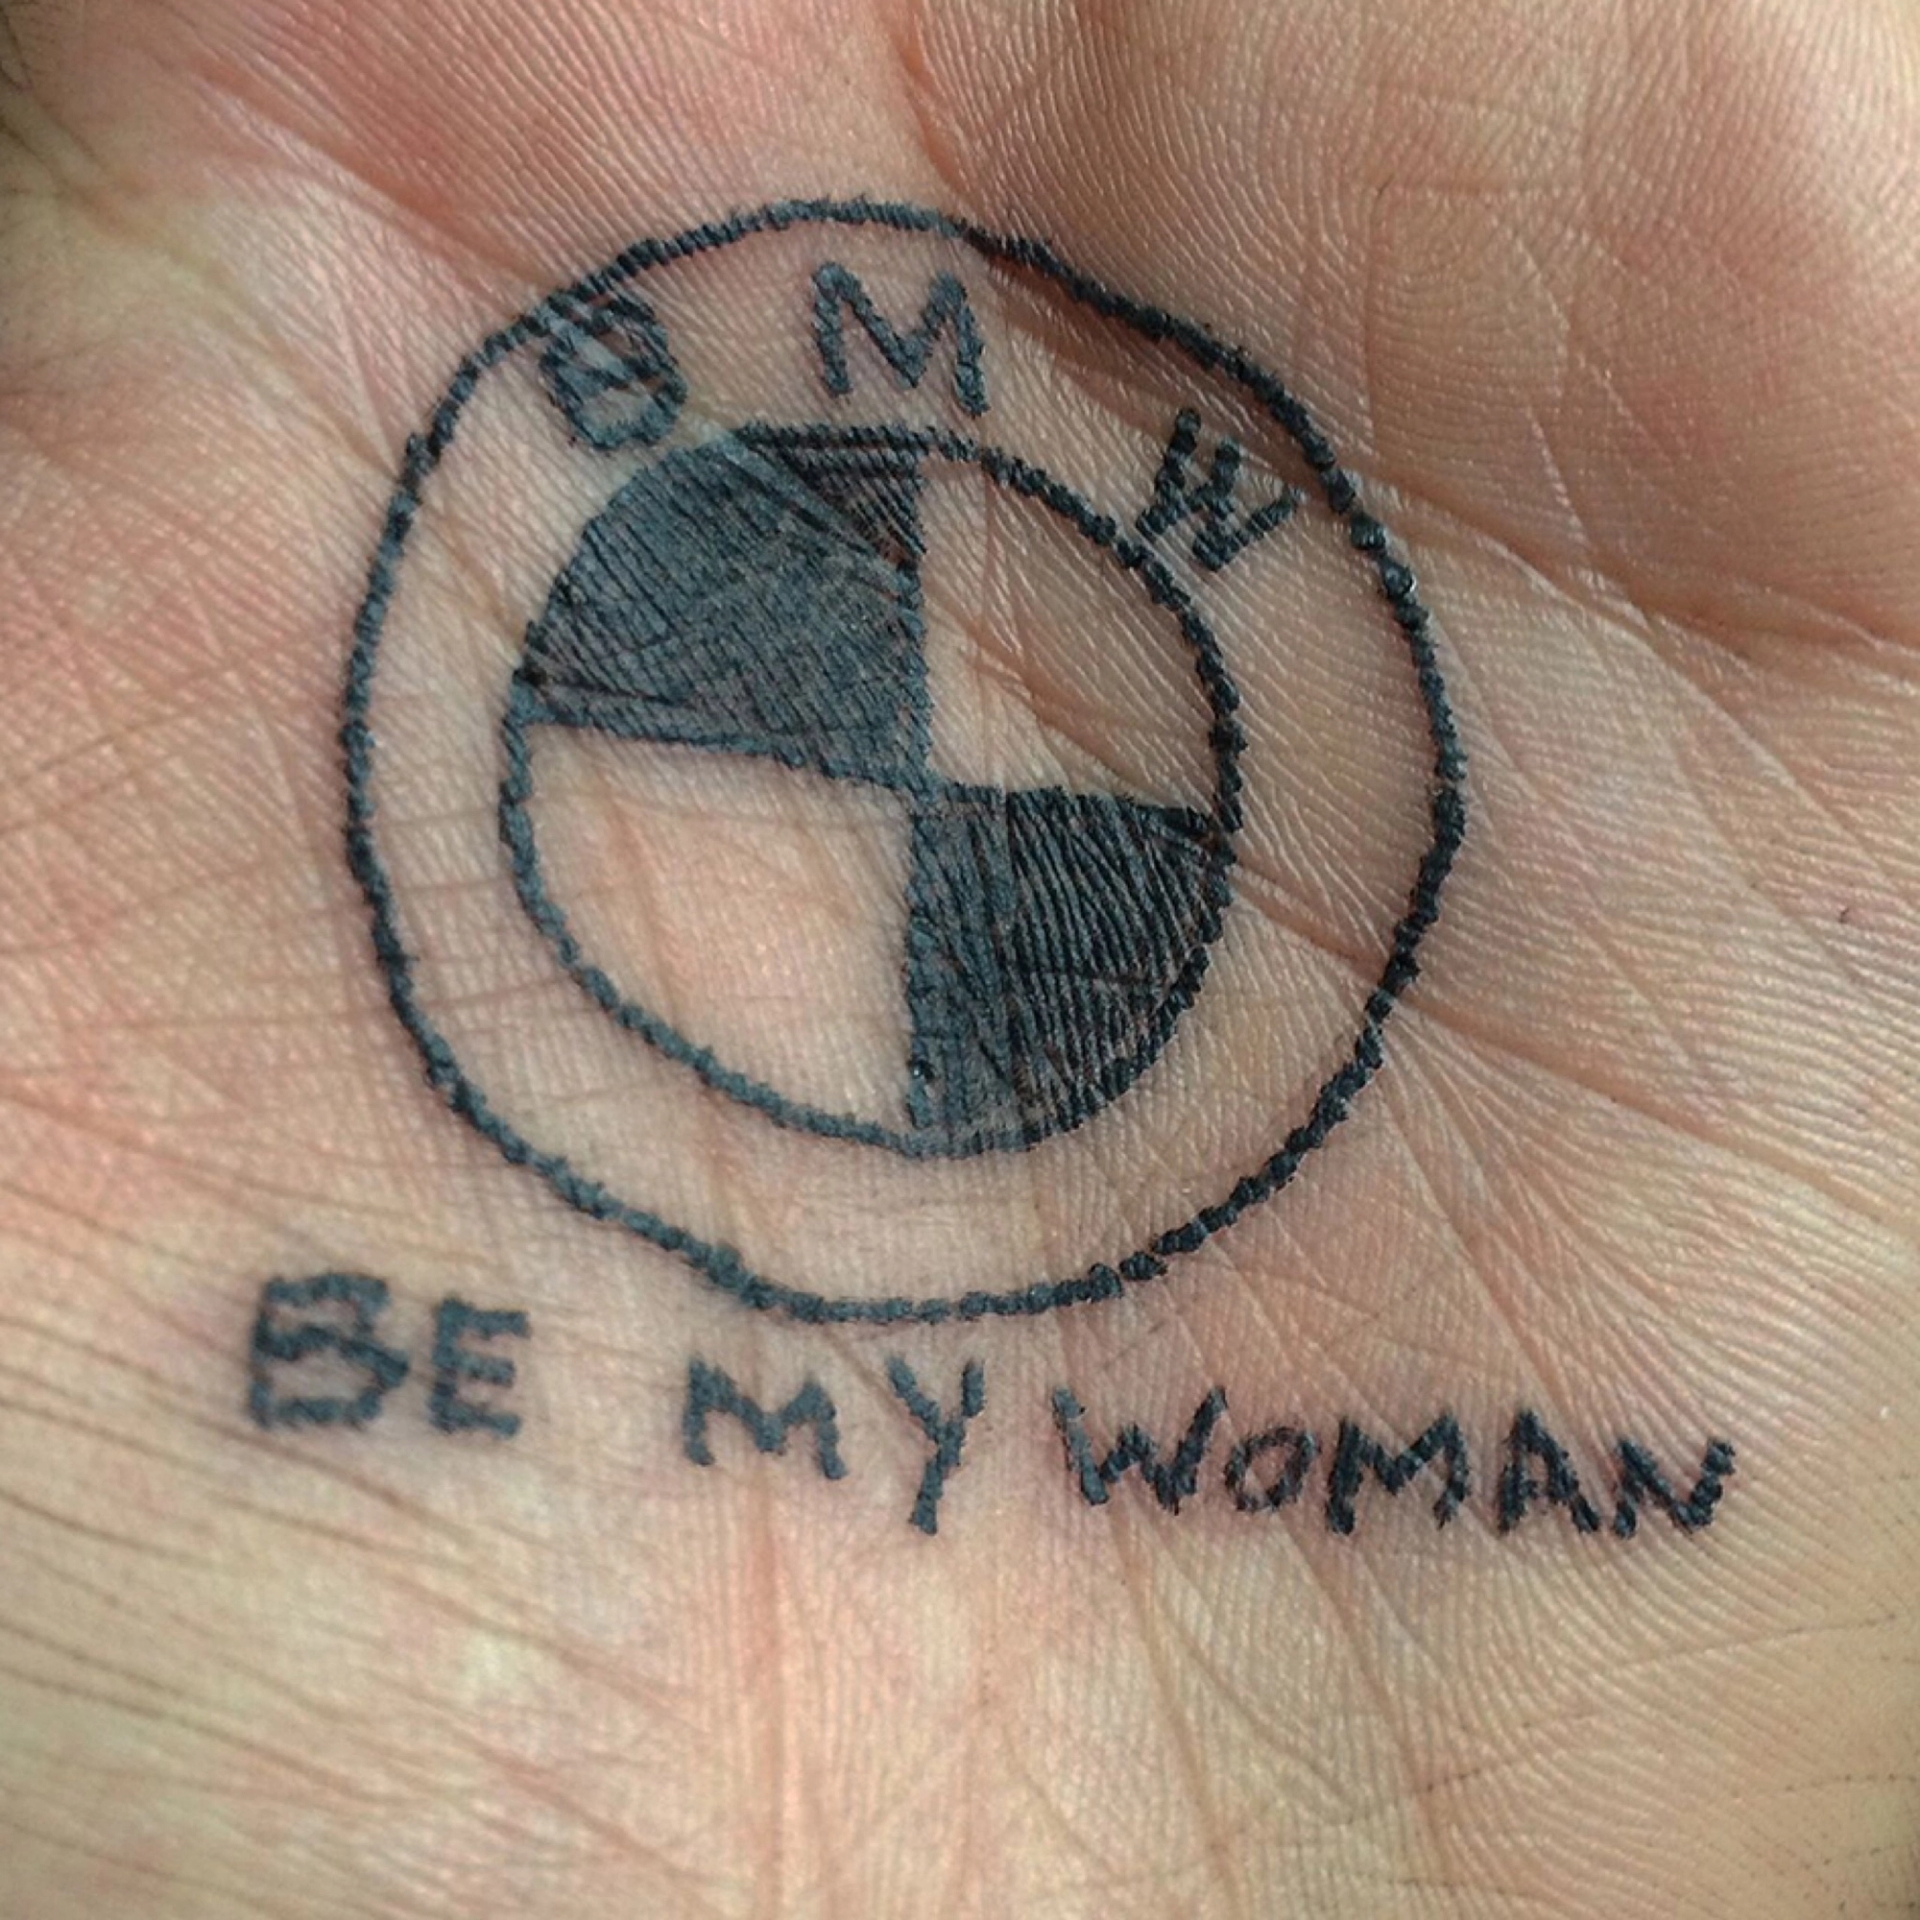 Roxman Gatt, "Be My Woman"